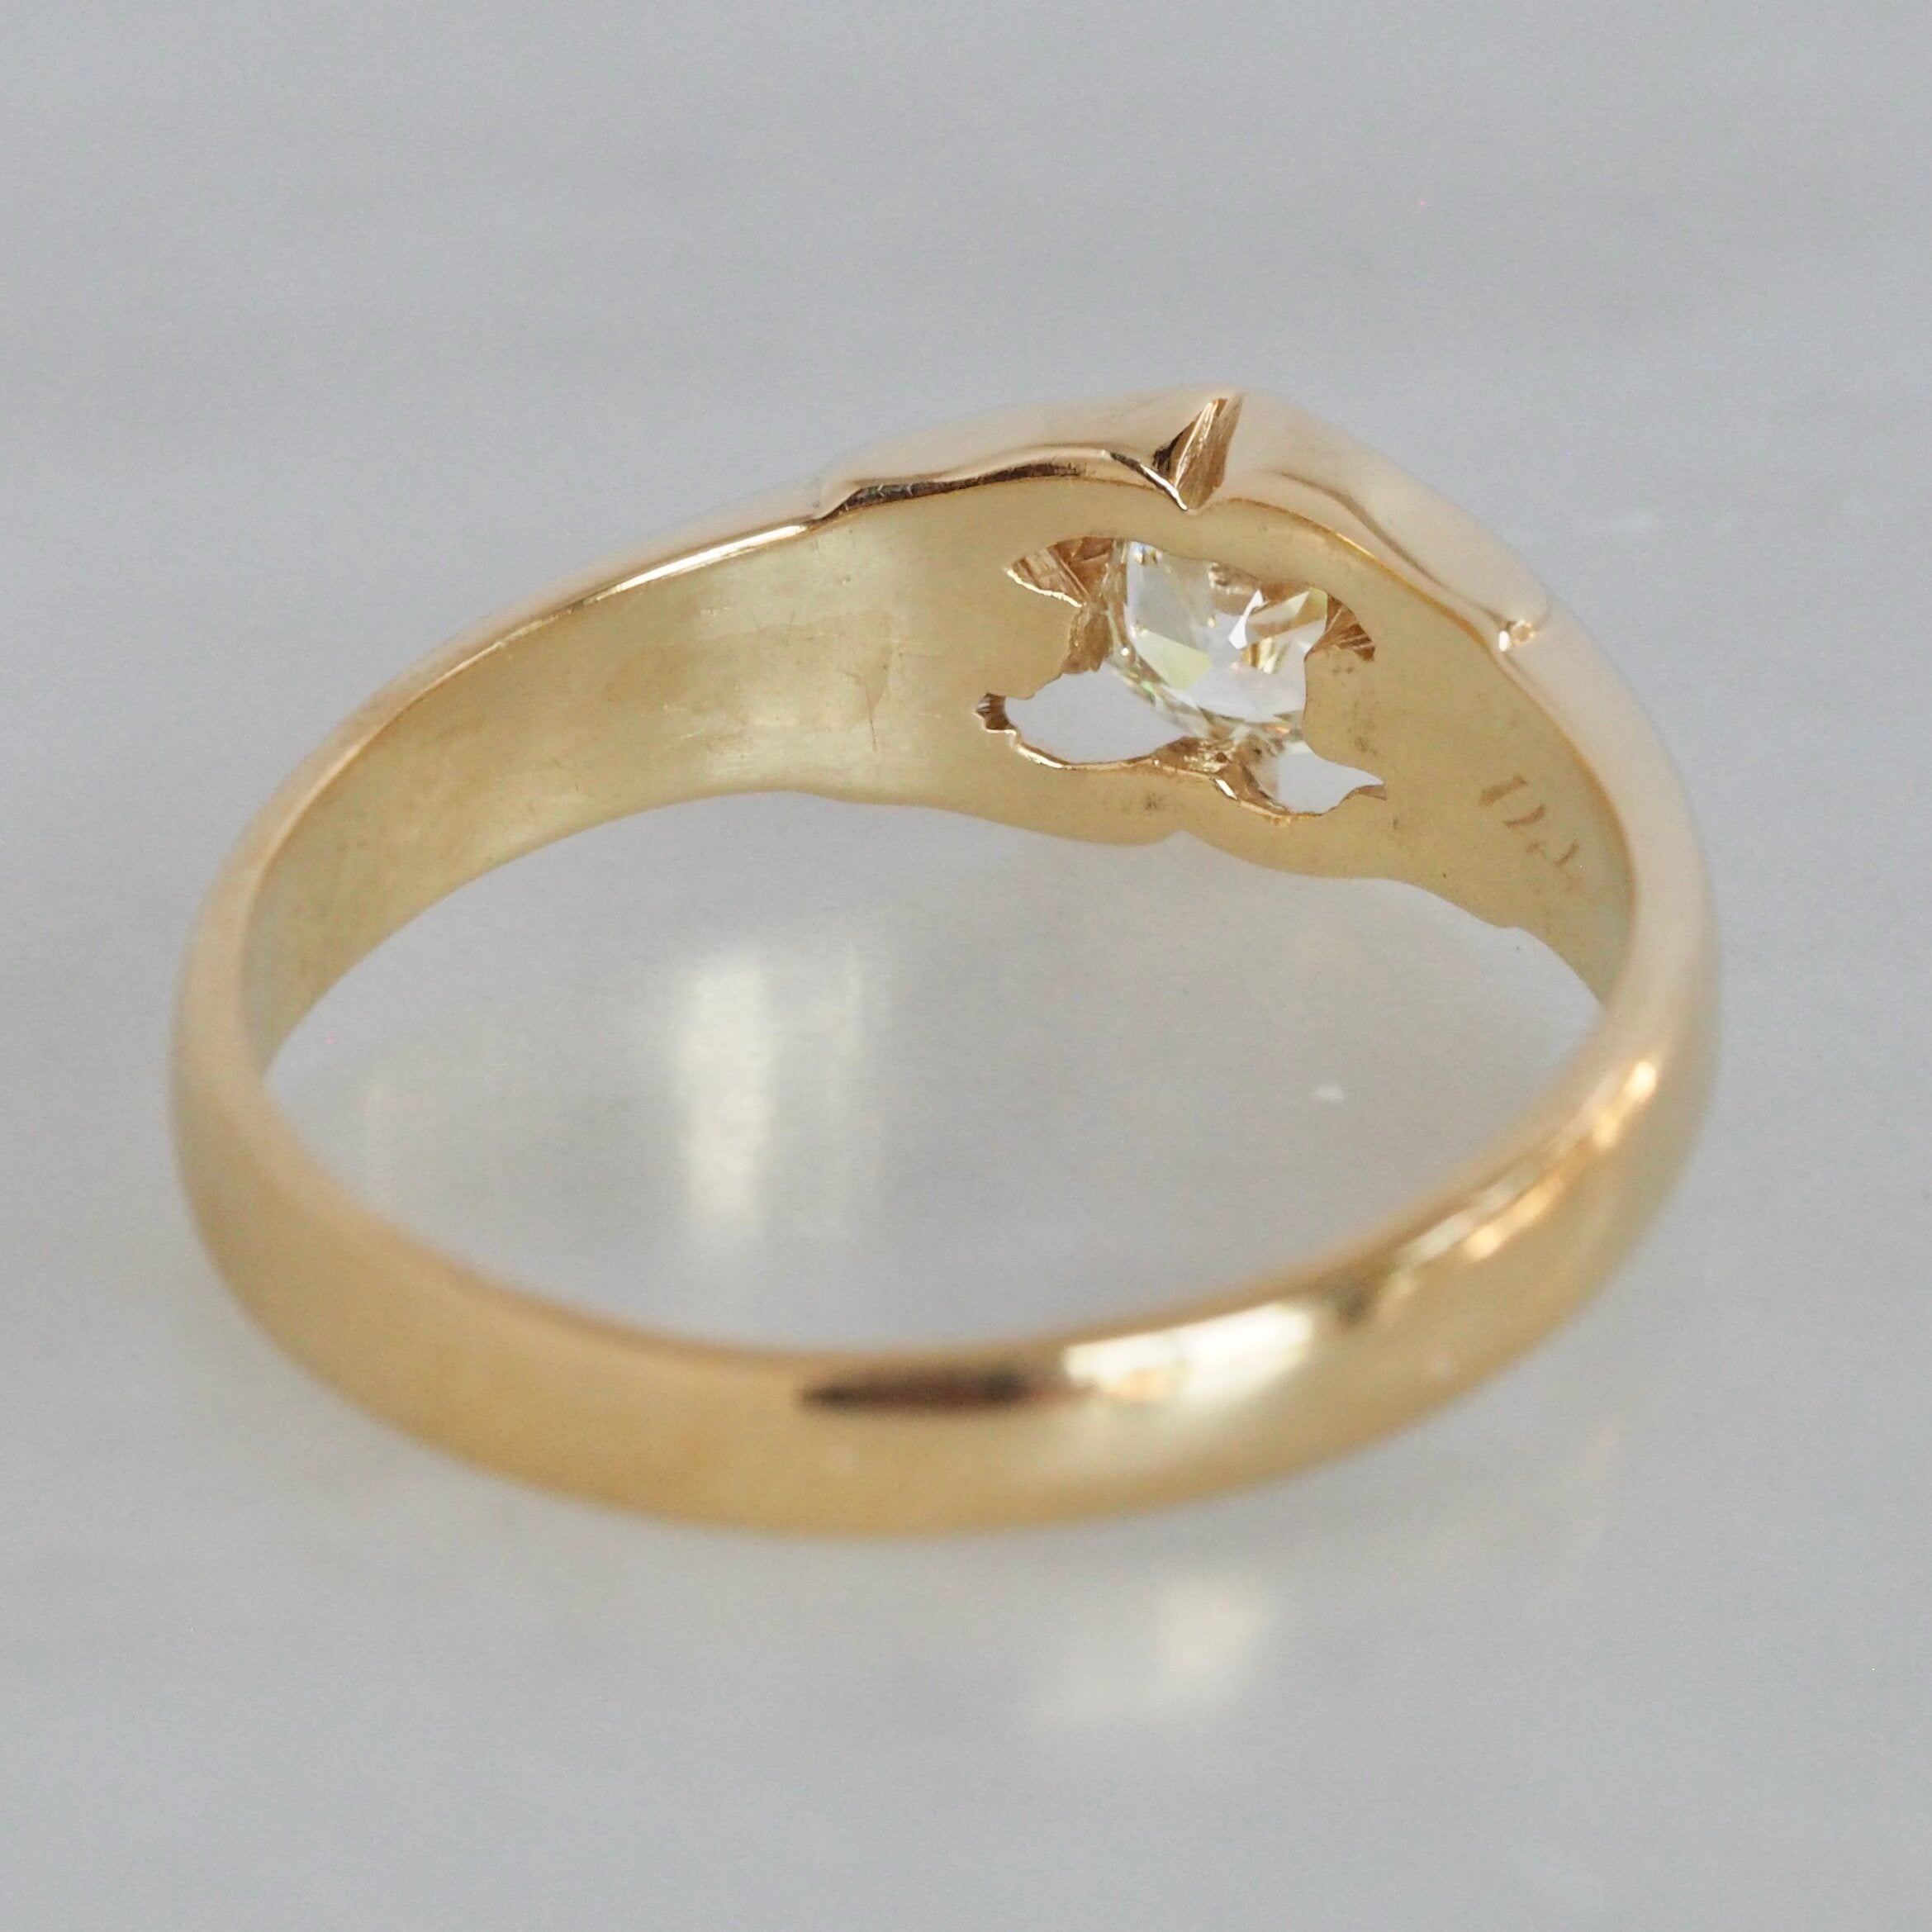 Art Nouveau 18k Gold Old European Cut Diamond Ring